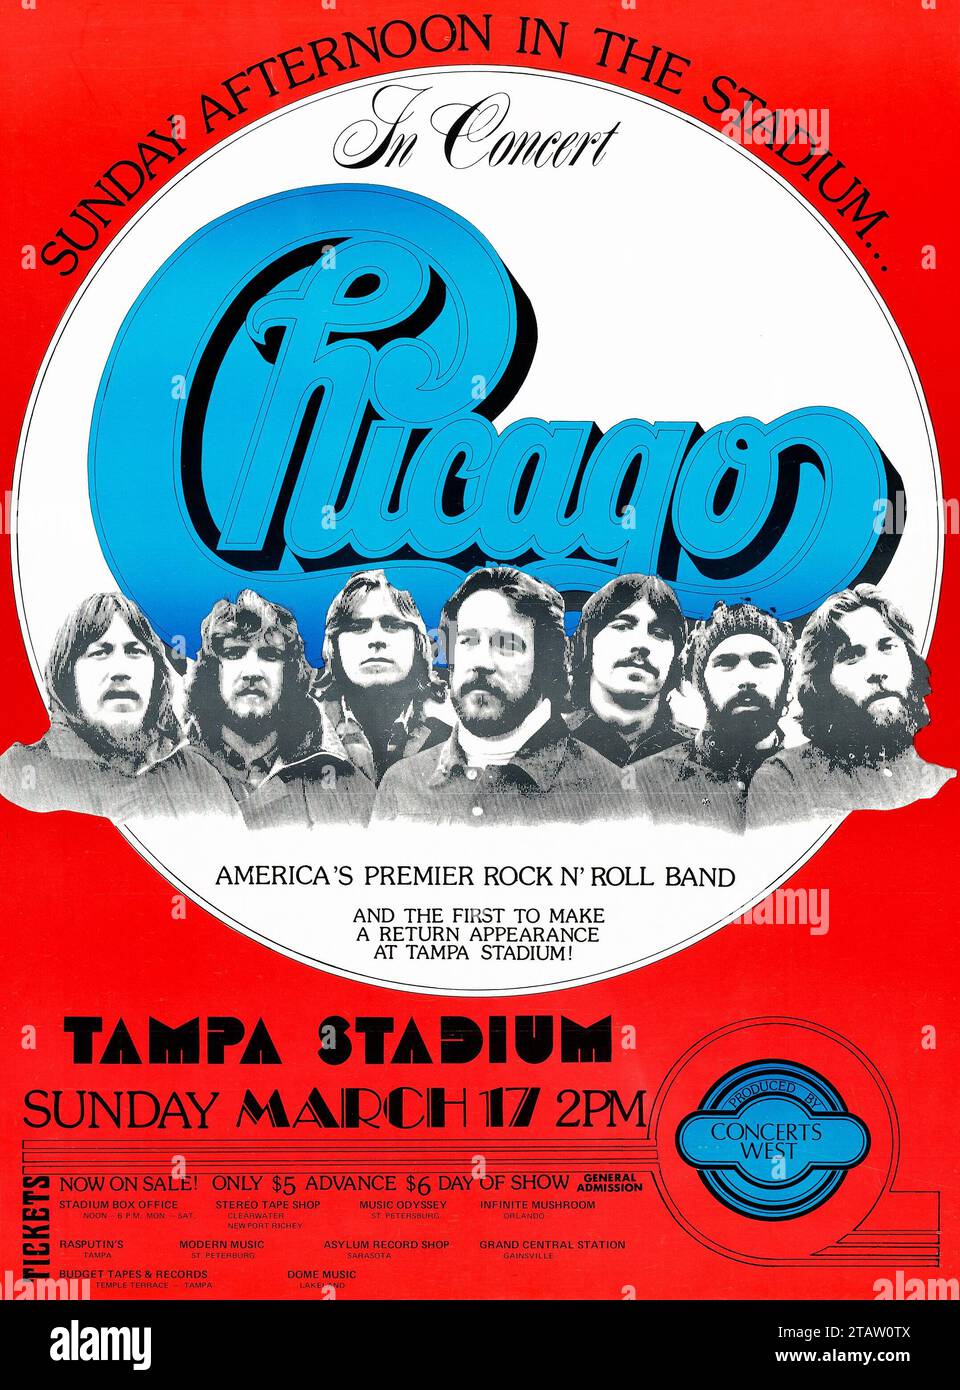 Chicago - 1974 Tampa Stadium Concert Poster - window card Stock Photo